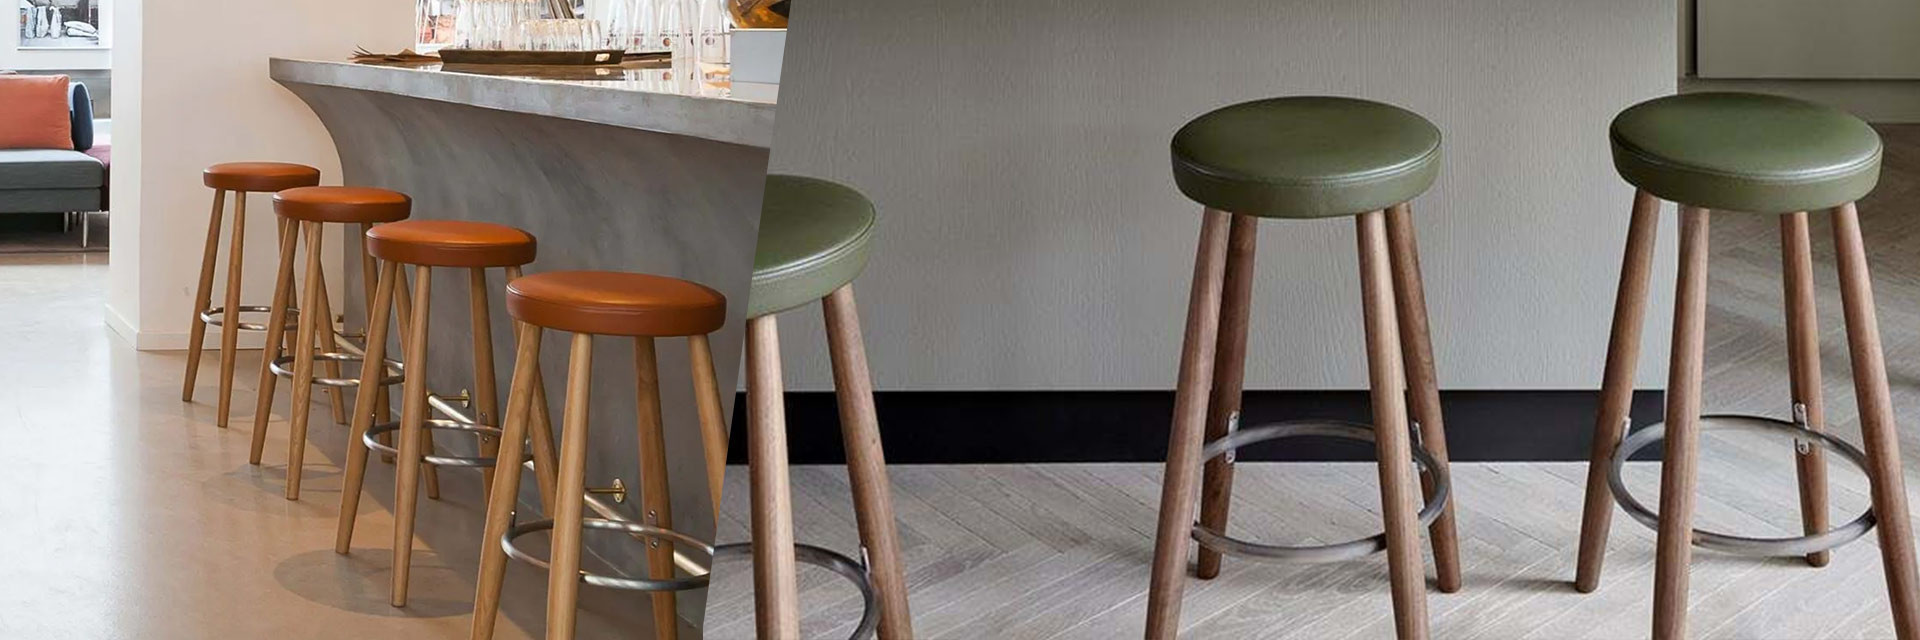 Danish and Scandinavian design bar stool - La boutique danoise